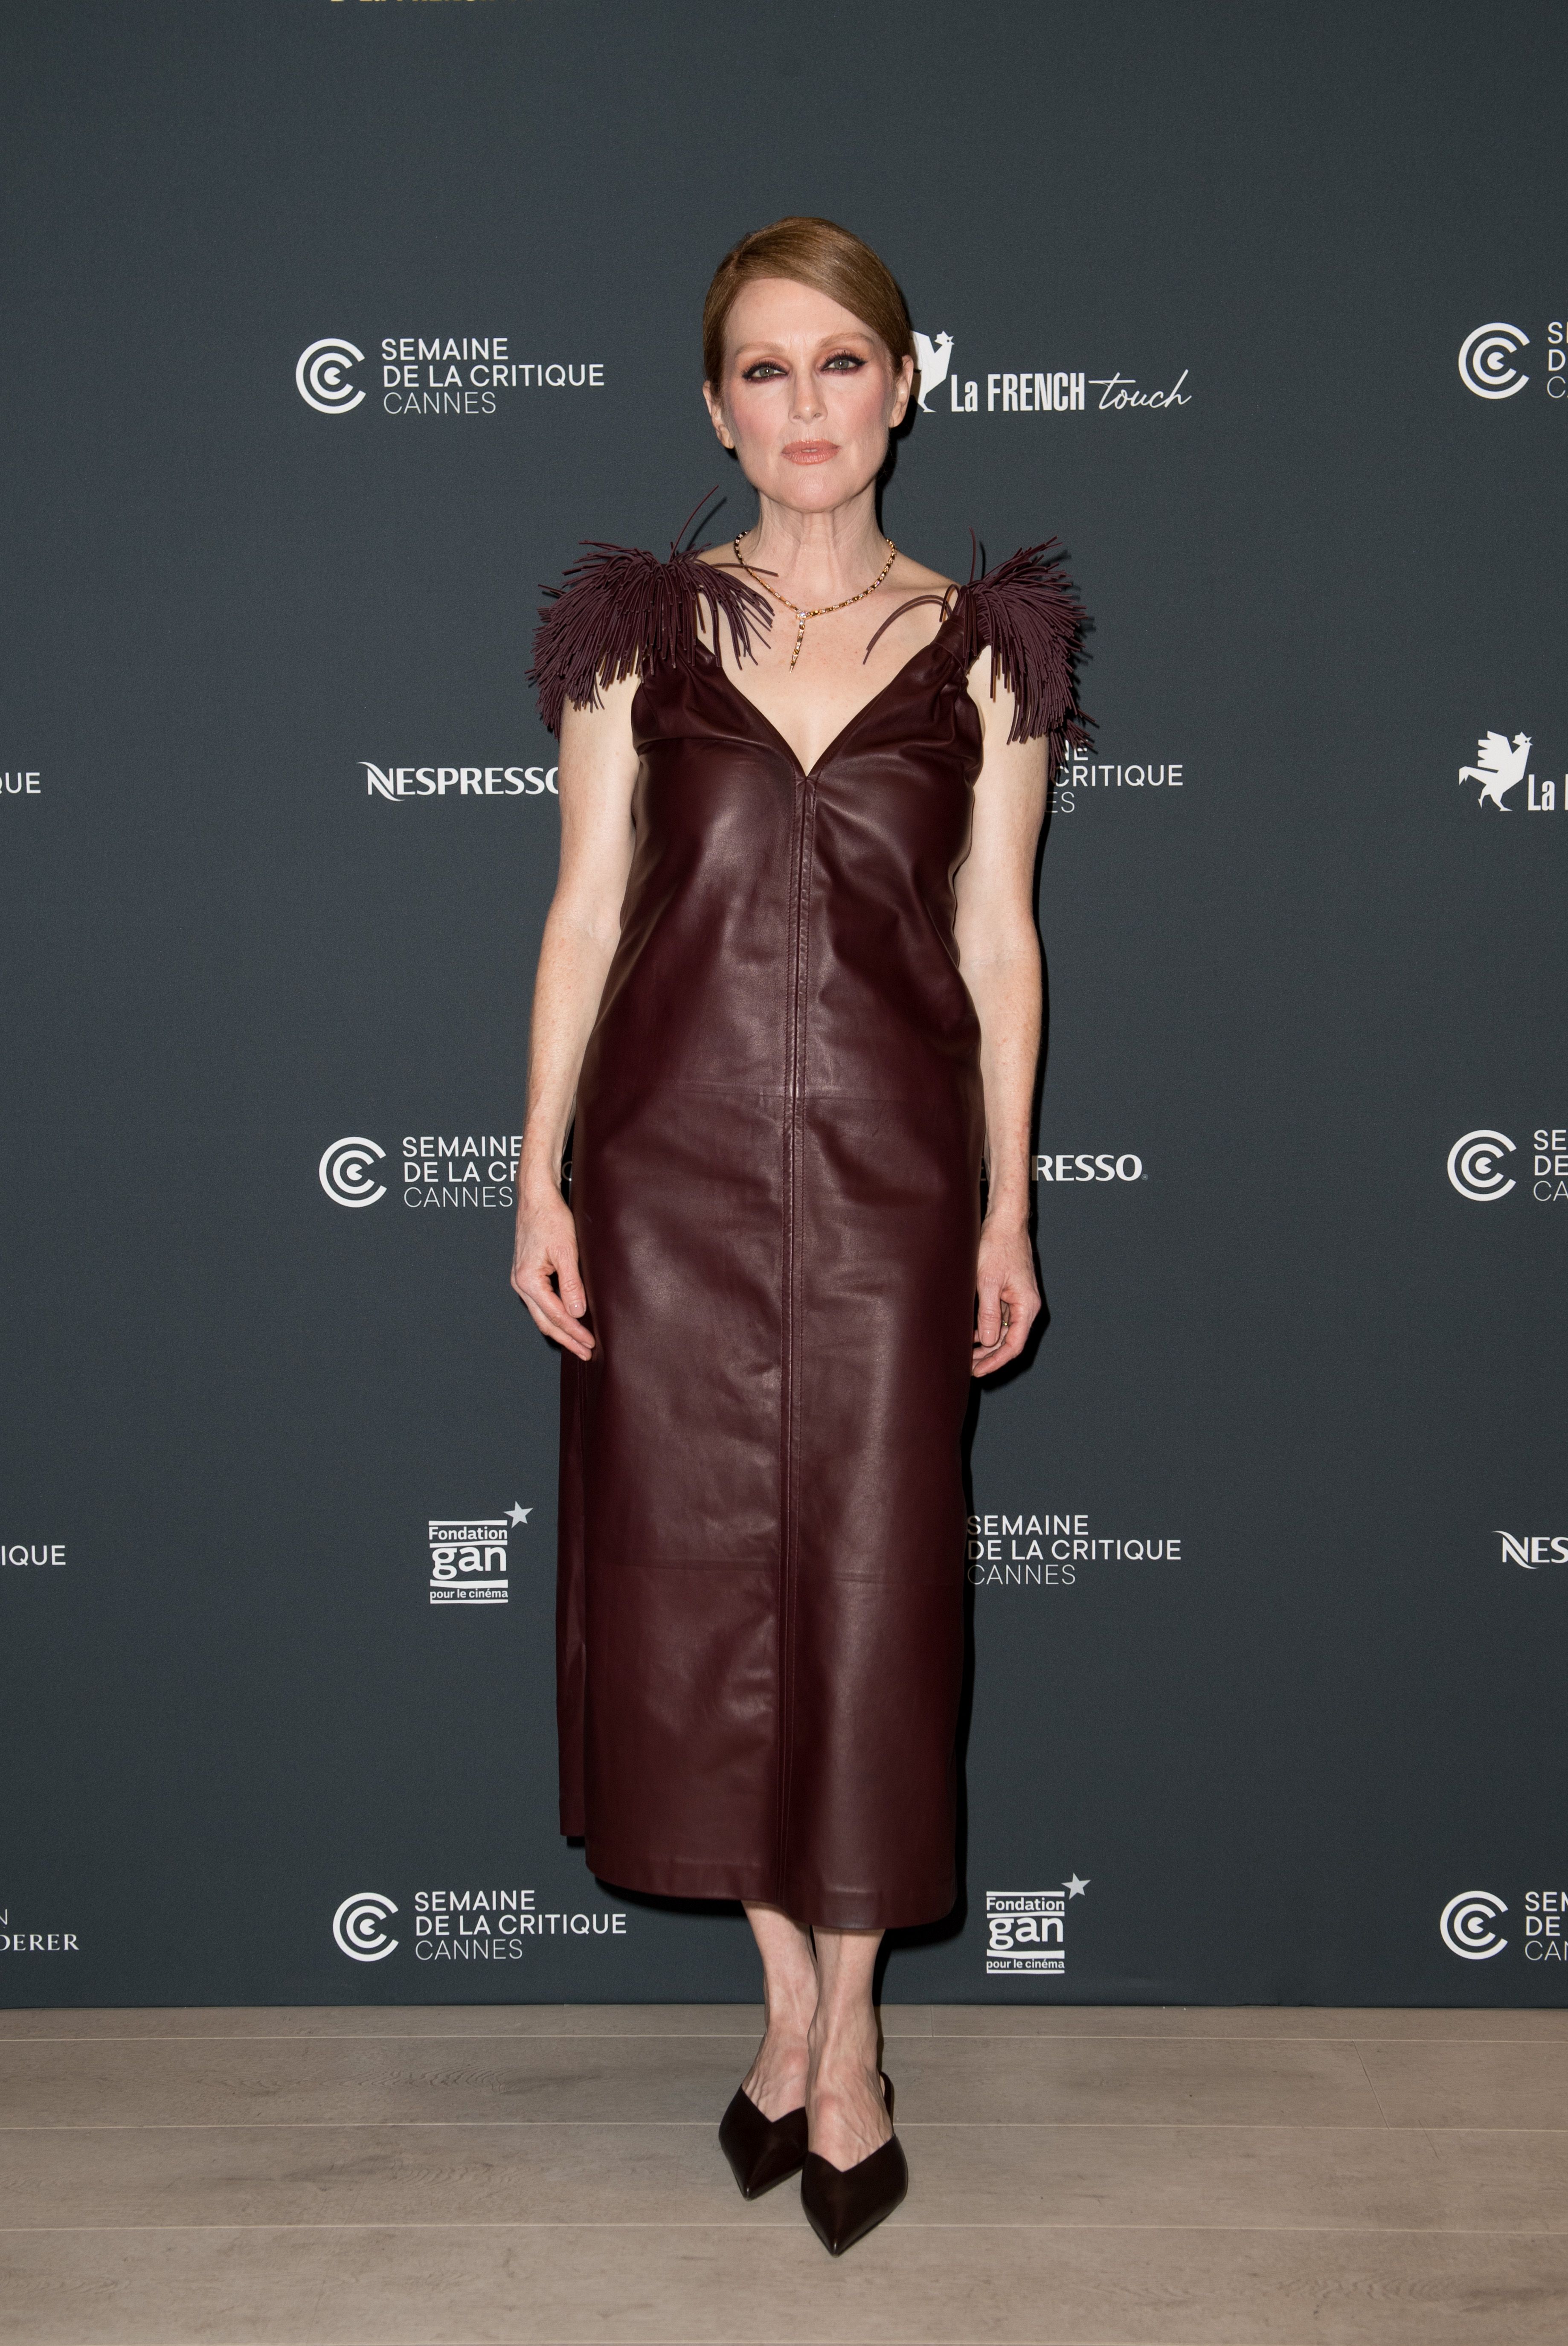 Julianne Moore Gets Chic in Hidden Heels at Cannes Film Festival